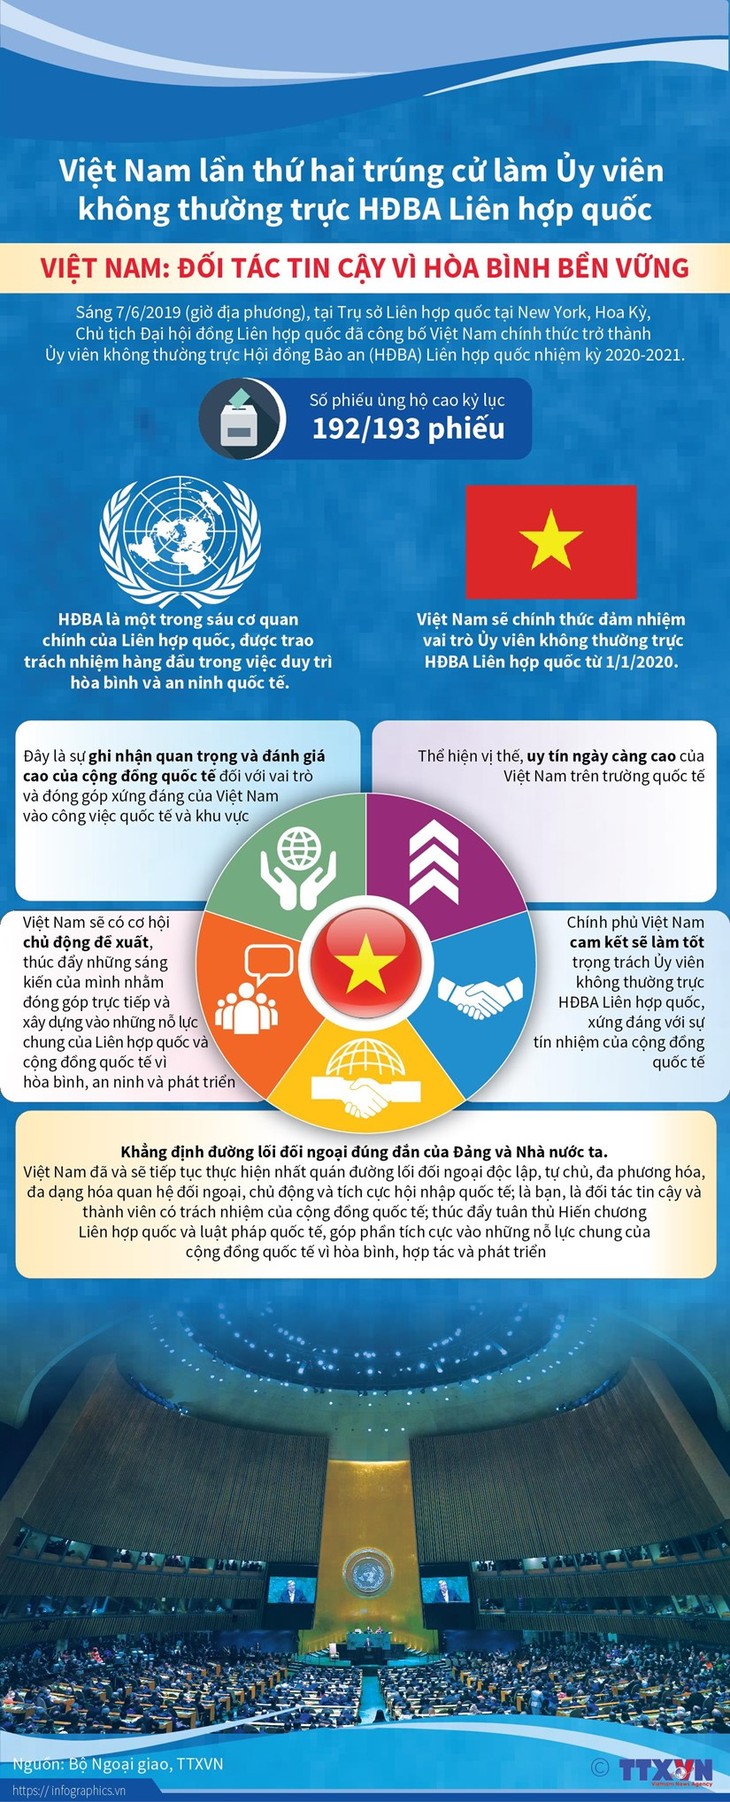 Notables logros de la diplomacia multilateral de Vietnam en 2019 - ảnh 1